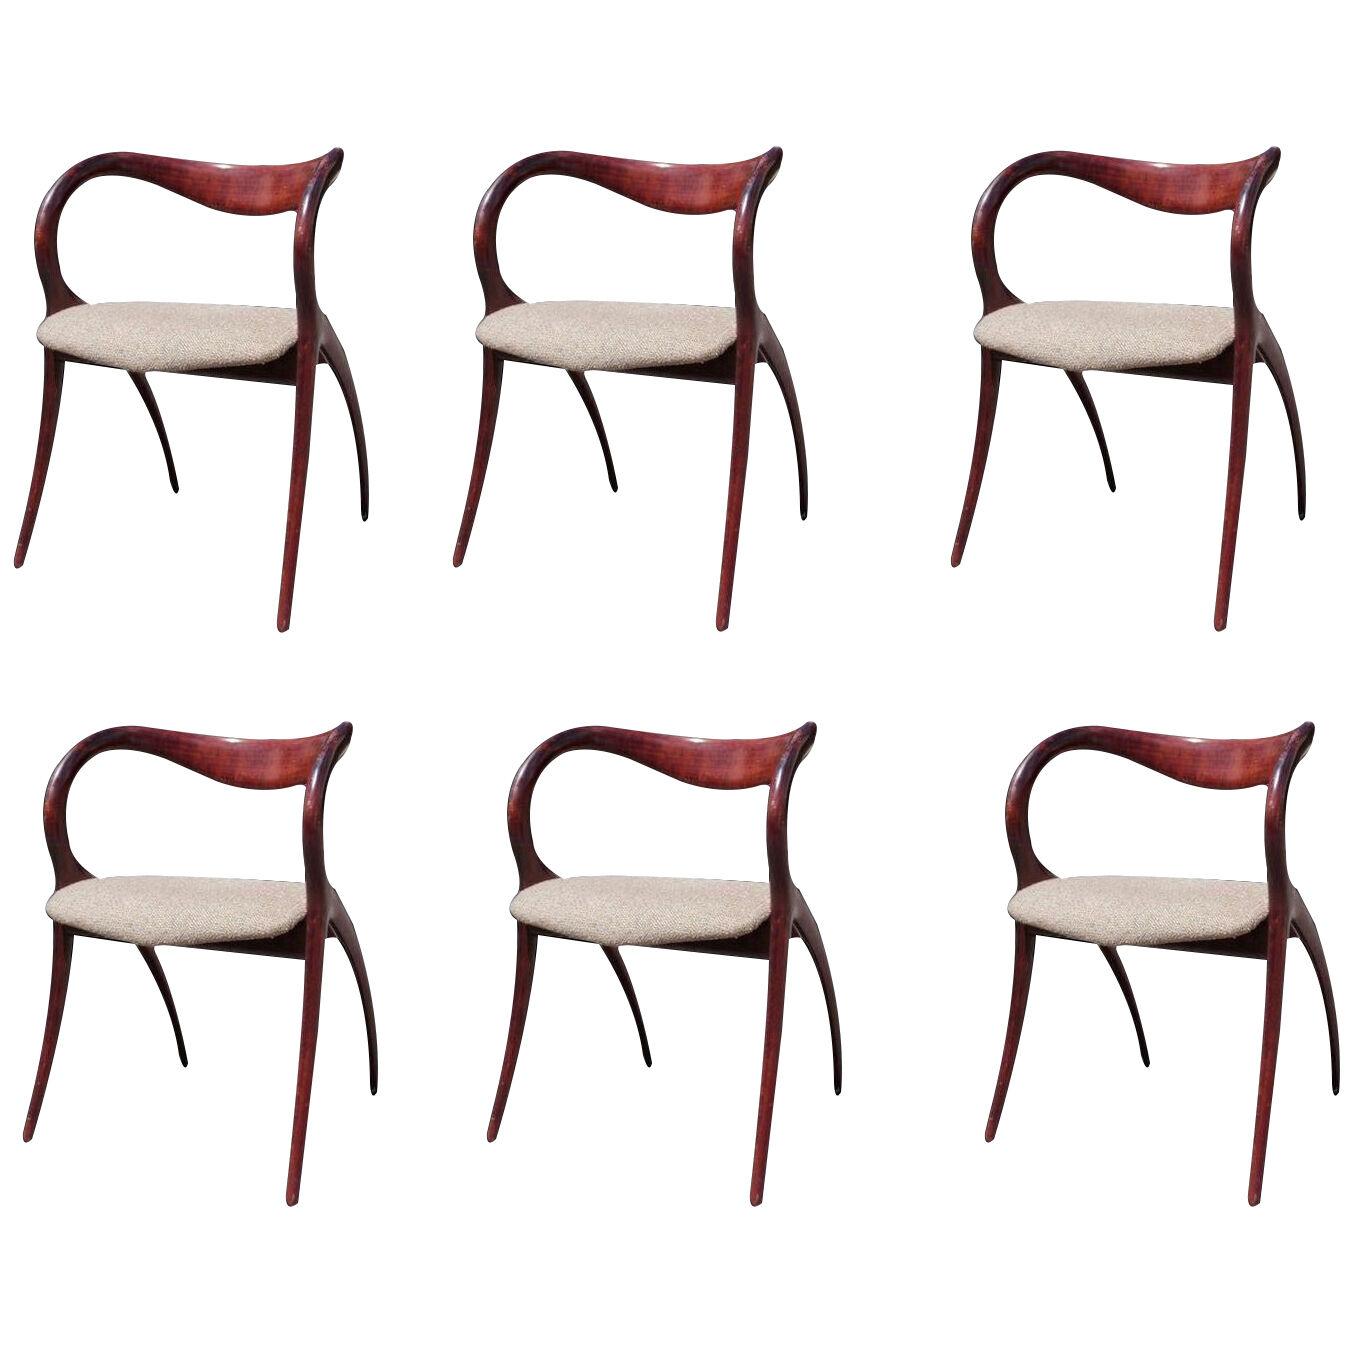 Italian Organic Sculptural Cherrywood Star Chairs by A. Sibau - Set of 6